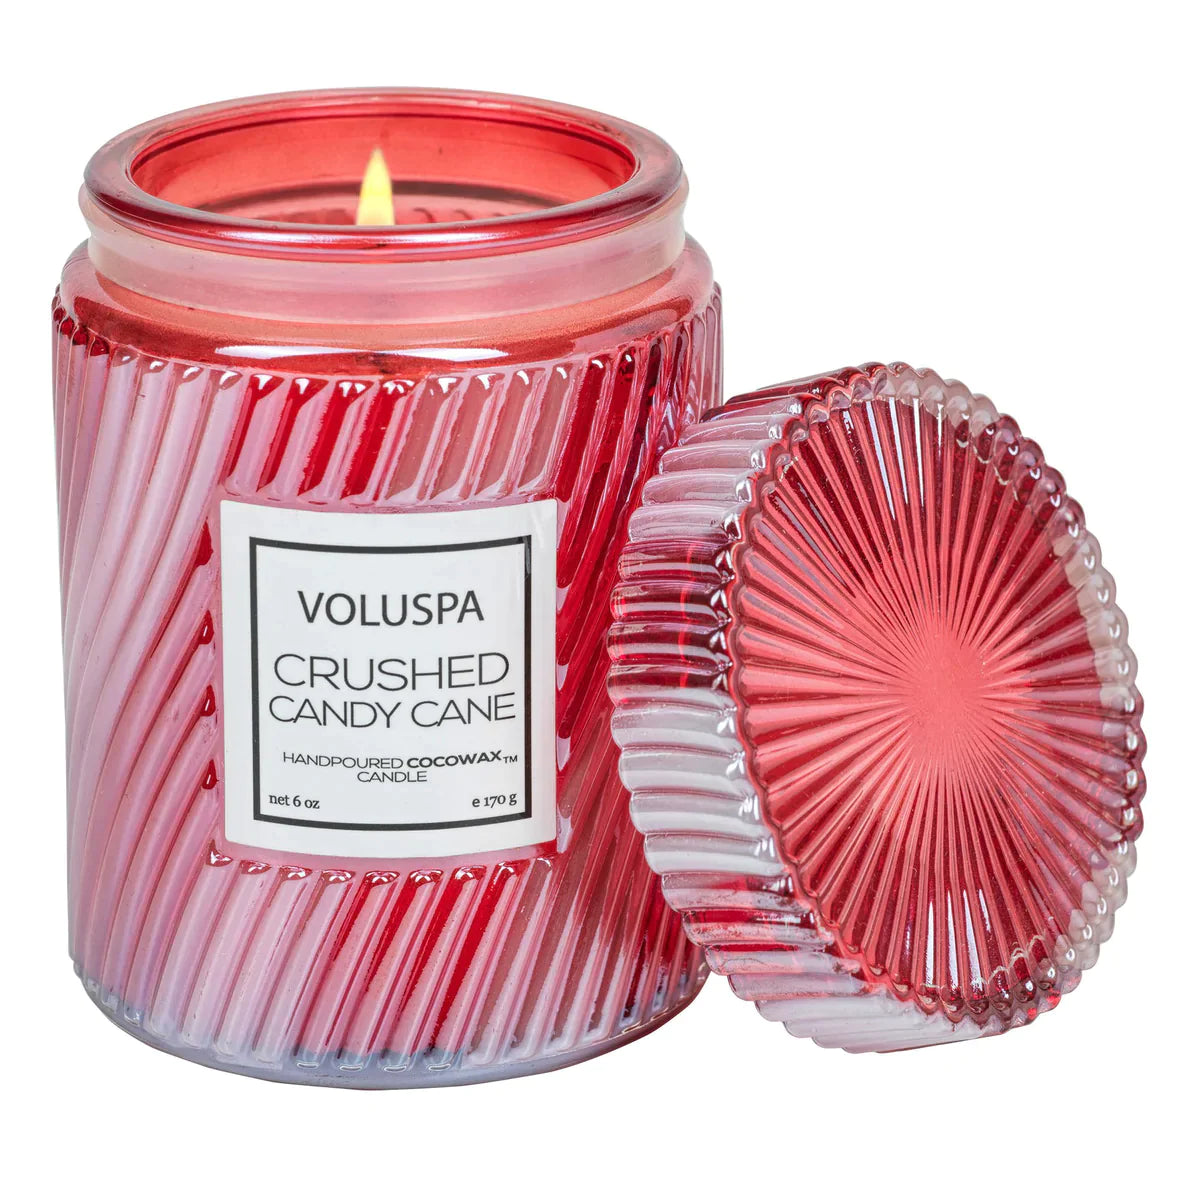 Voluspa Crushed Candy Cane Candle 6 oz Small Jar 